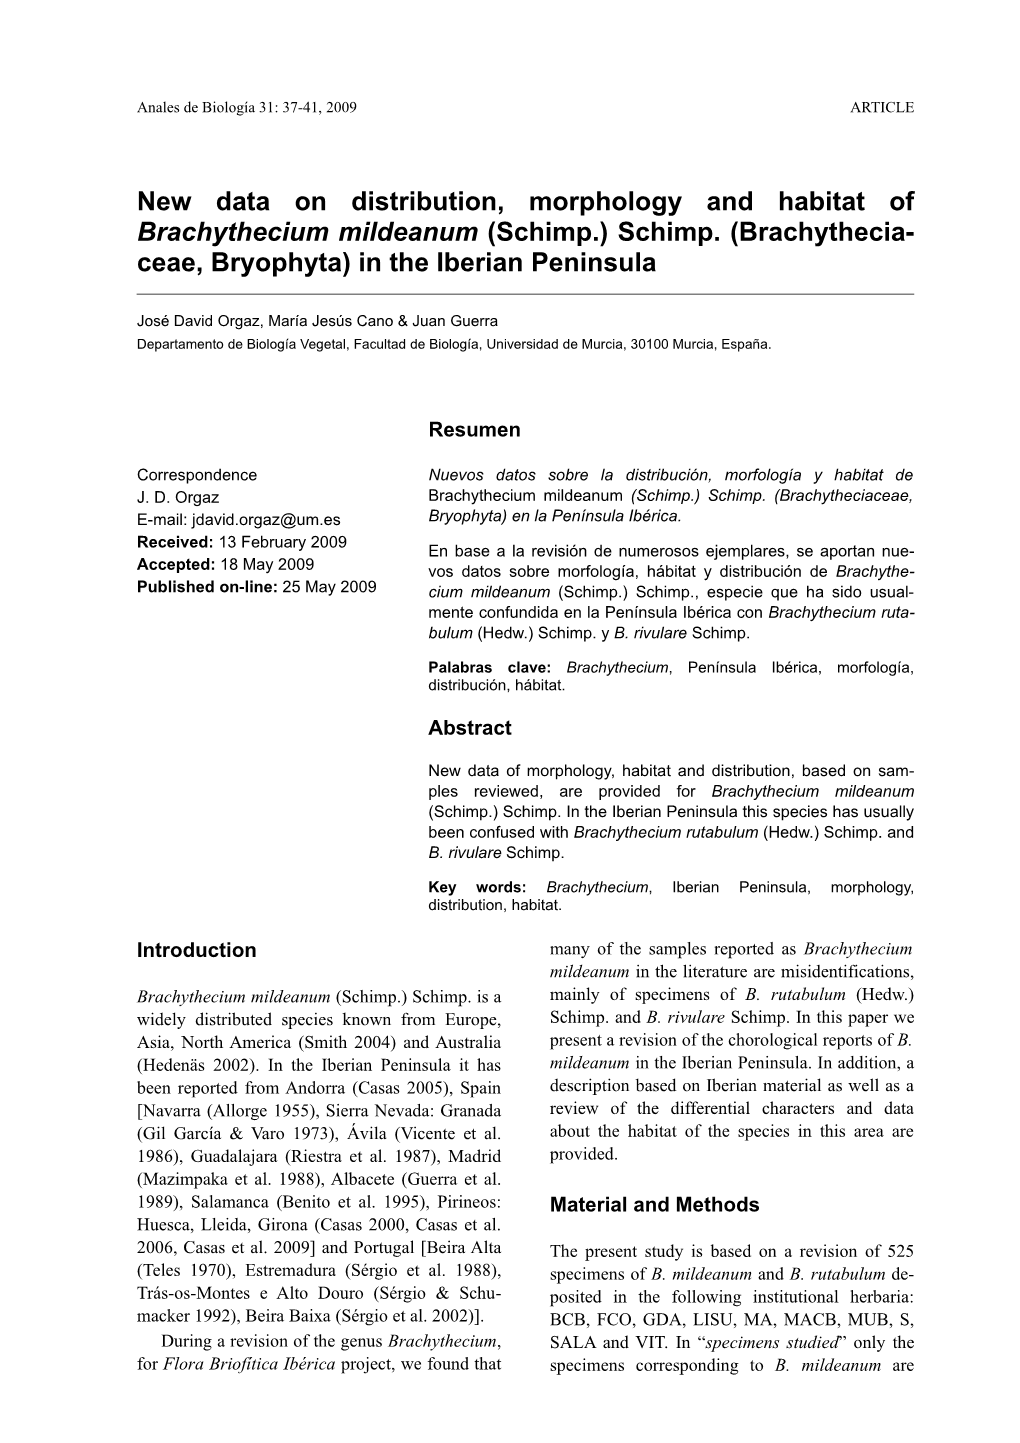 New Data on Distribution, Morphology and Habitat of Brachythecium Mildeanum (Schimp.) Schimp. (Brachythecia- Ceae, Bryophyta) in the Iberian Peninsula